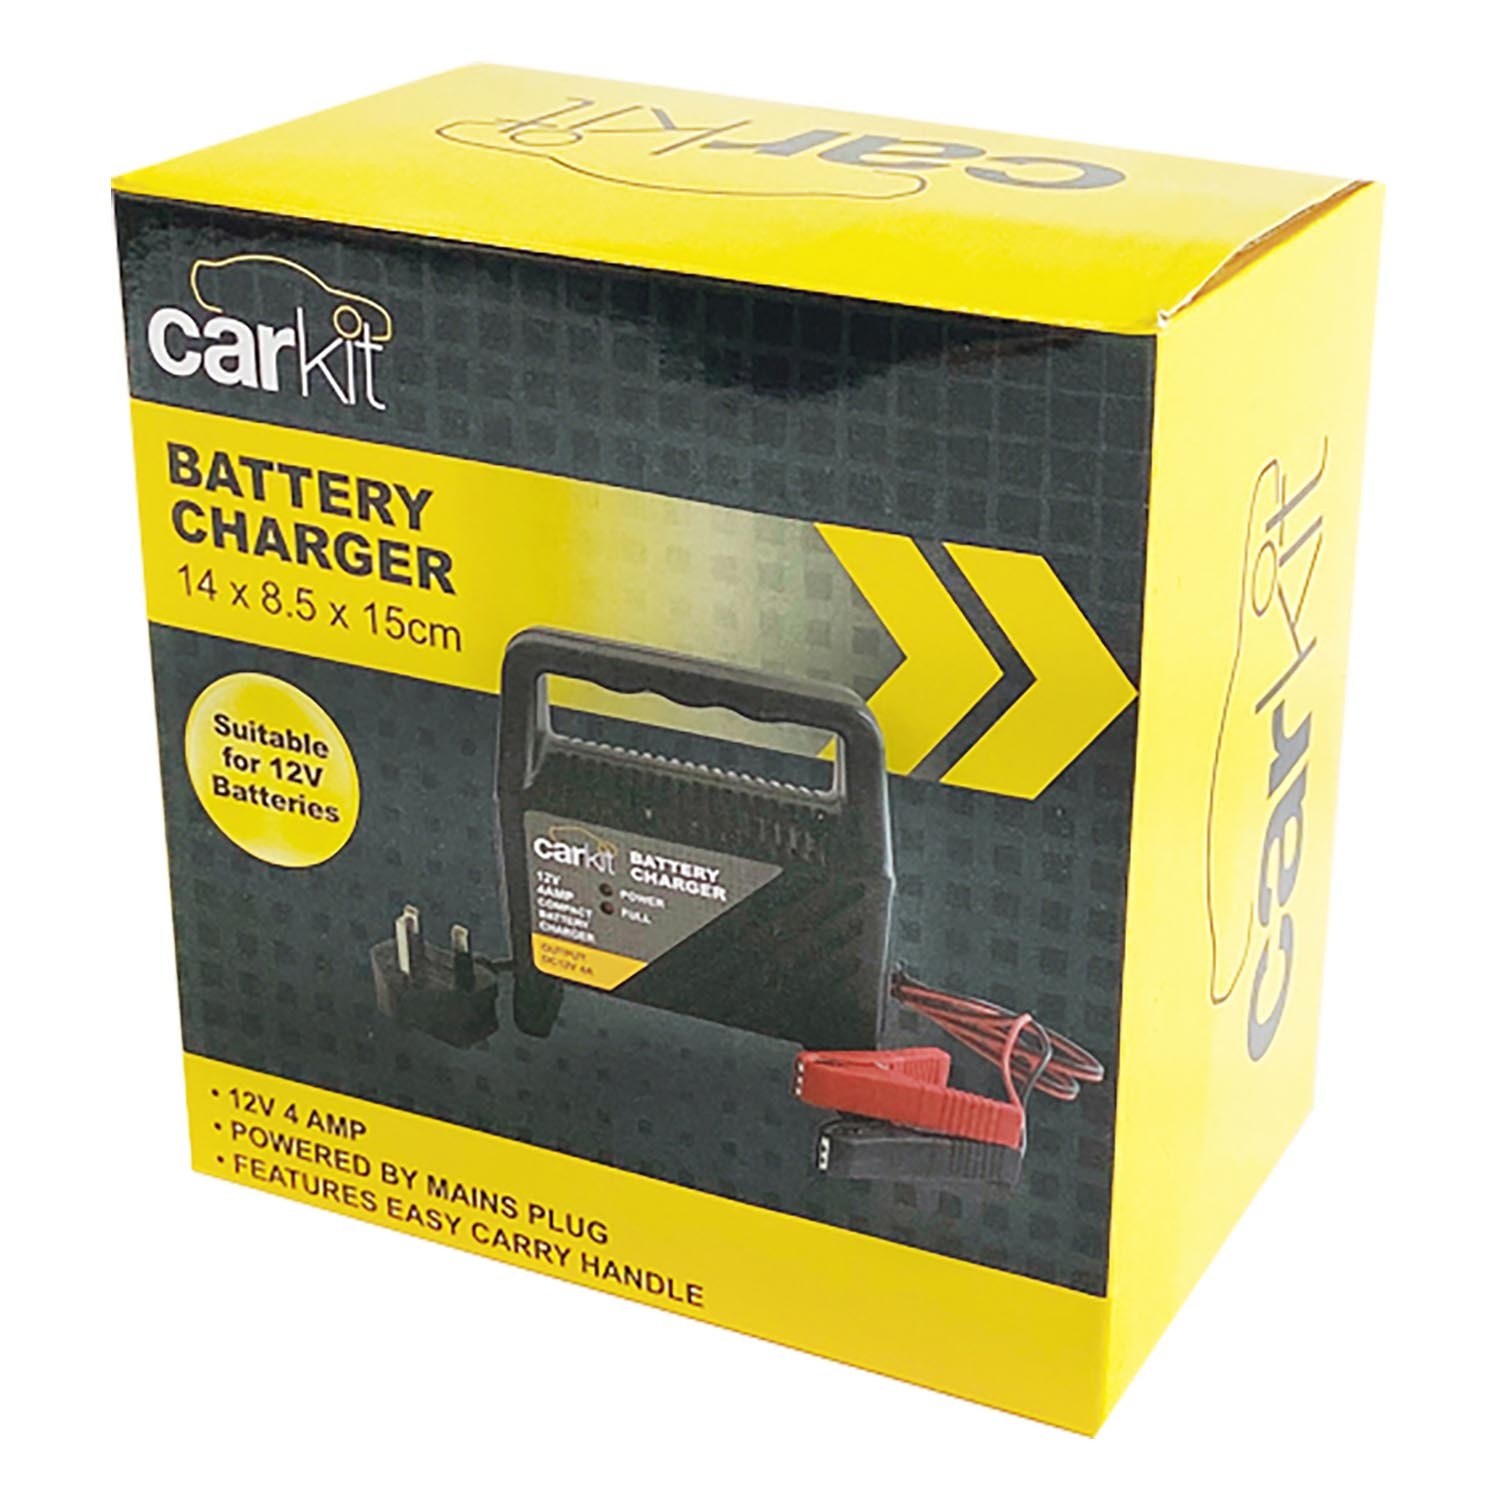 CarKit Black Battery Charger Image 1